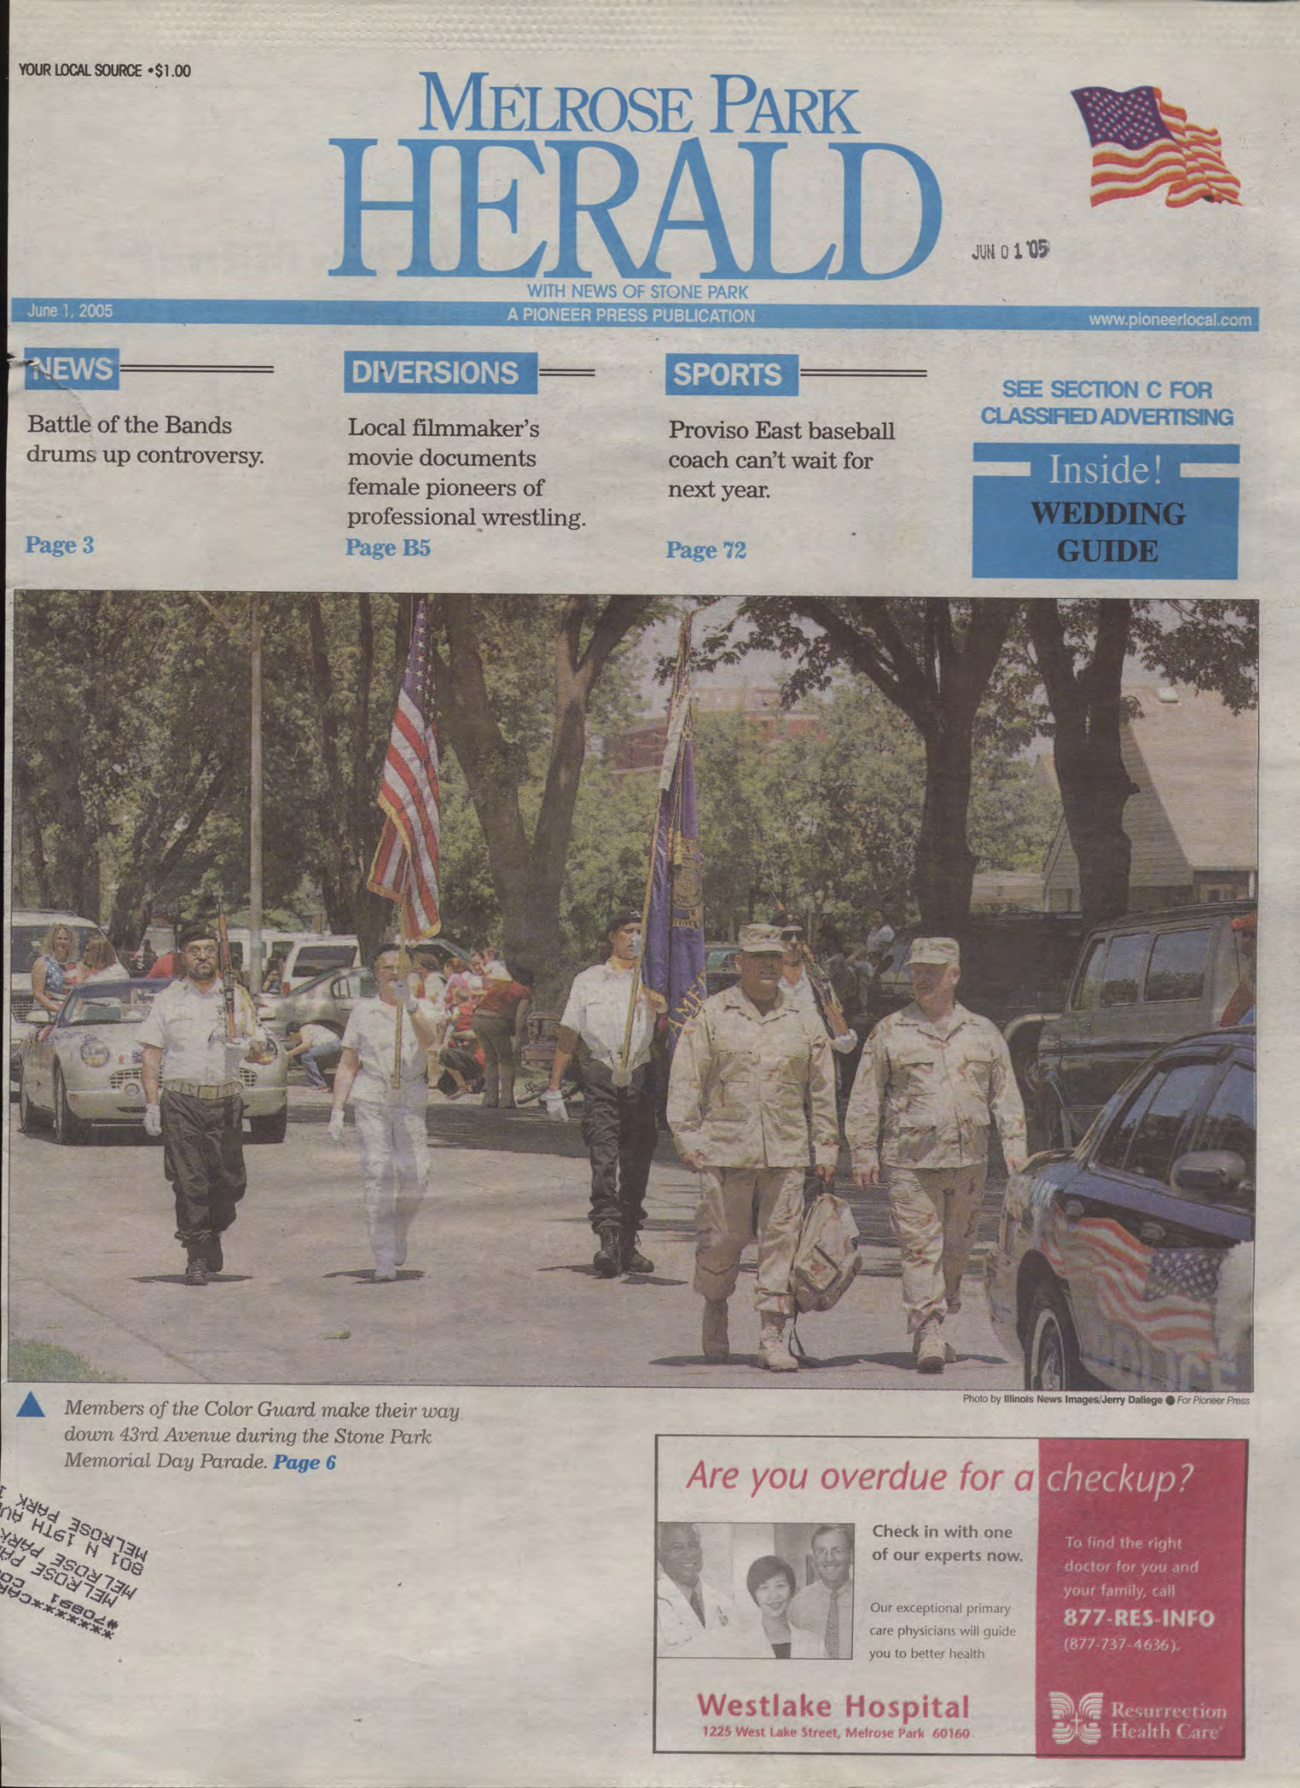 The Herald – 20050601